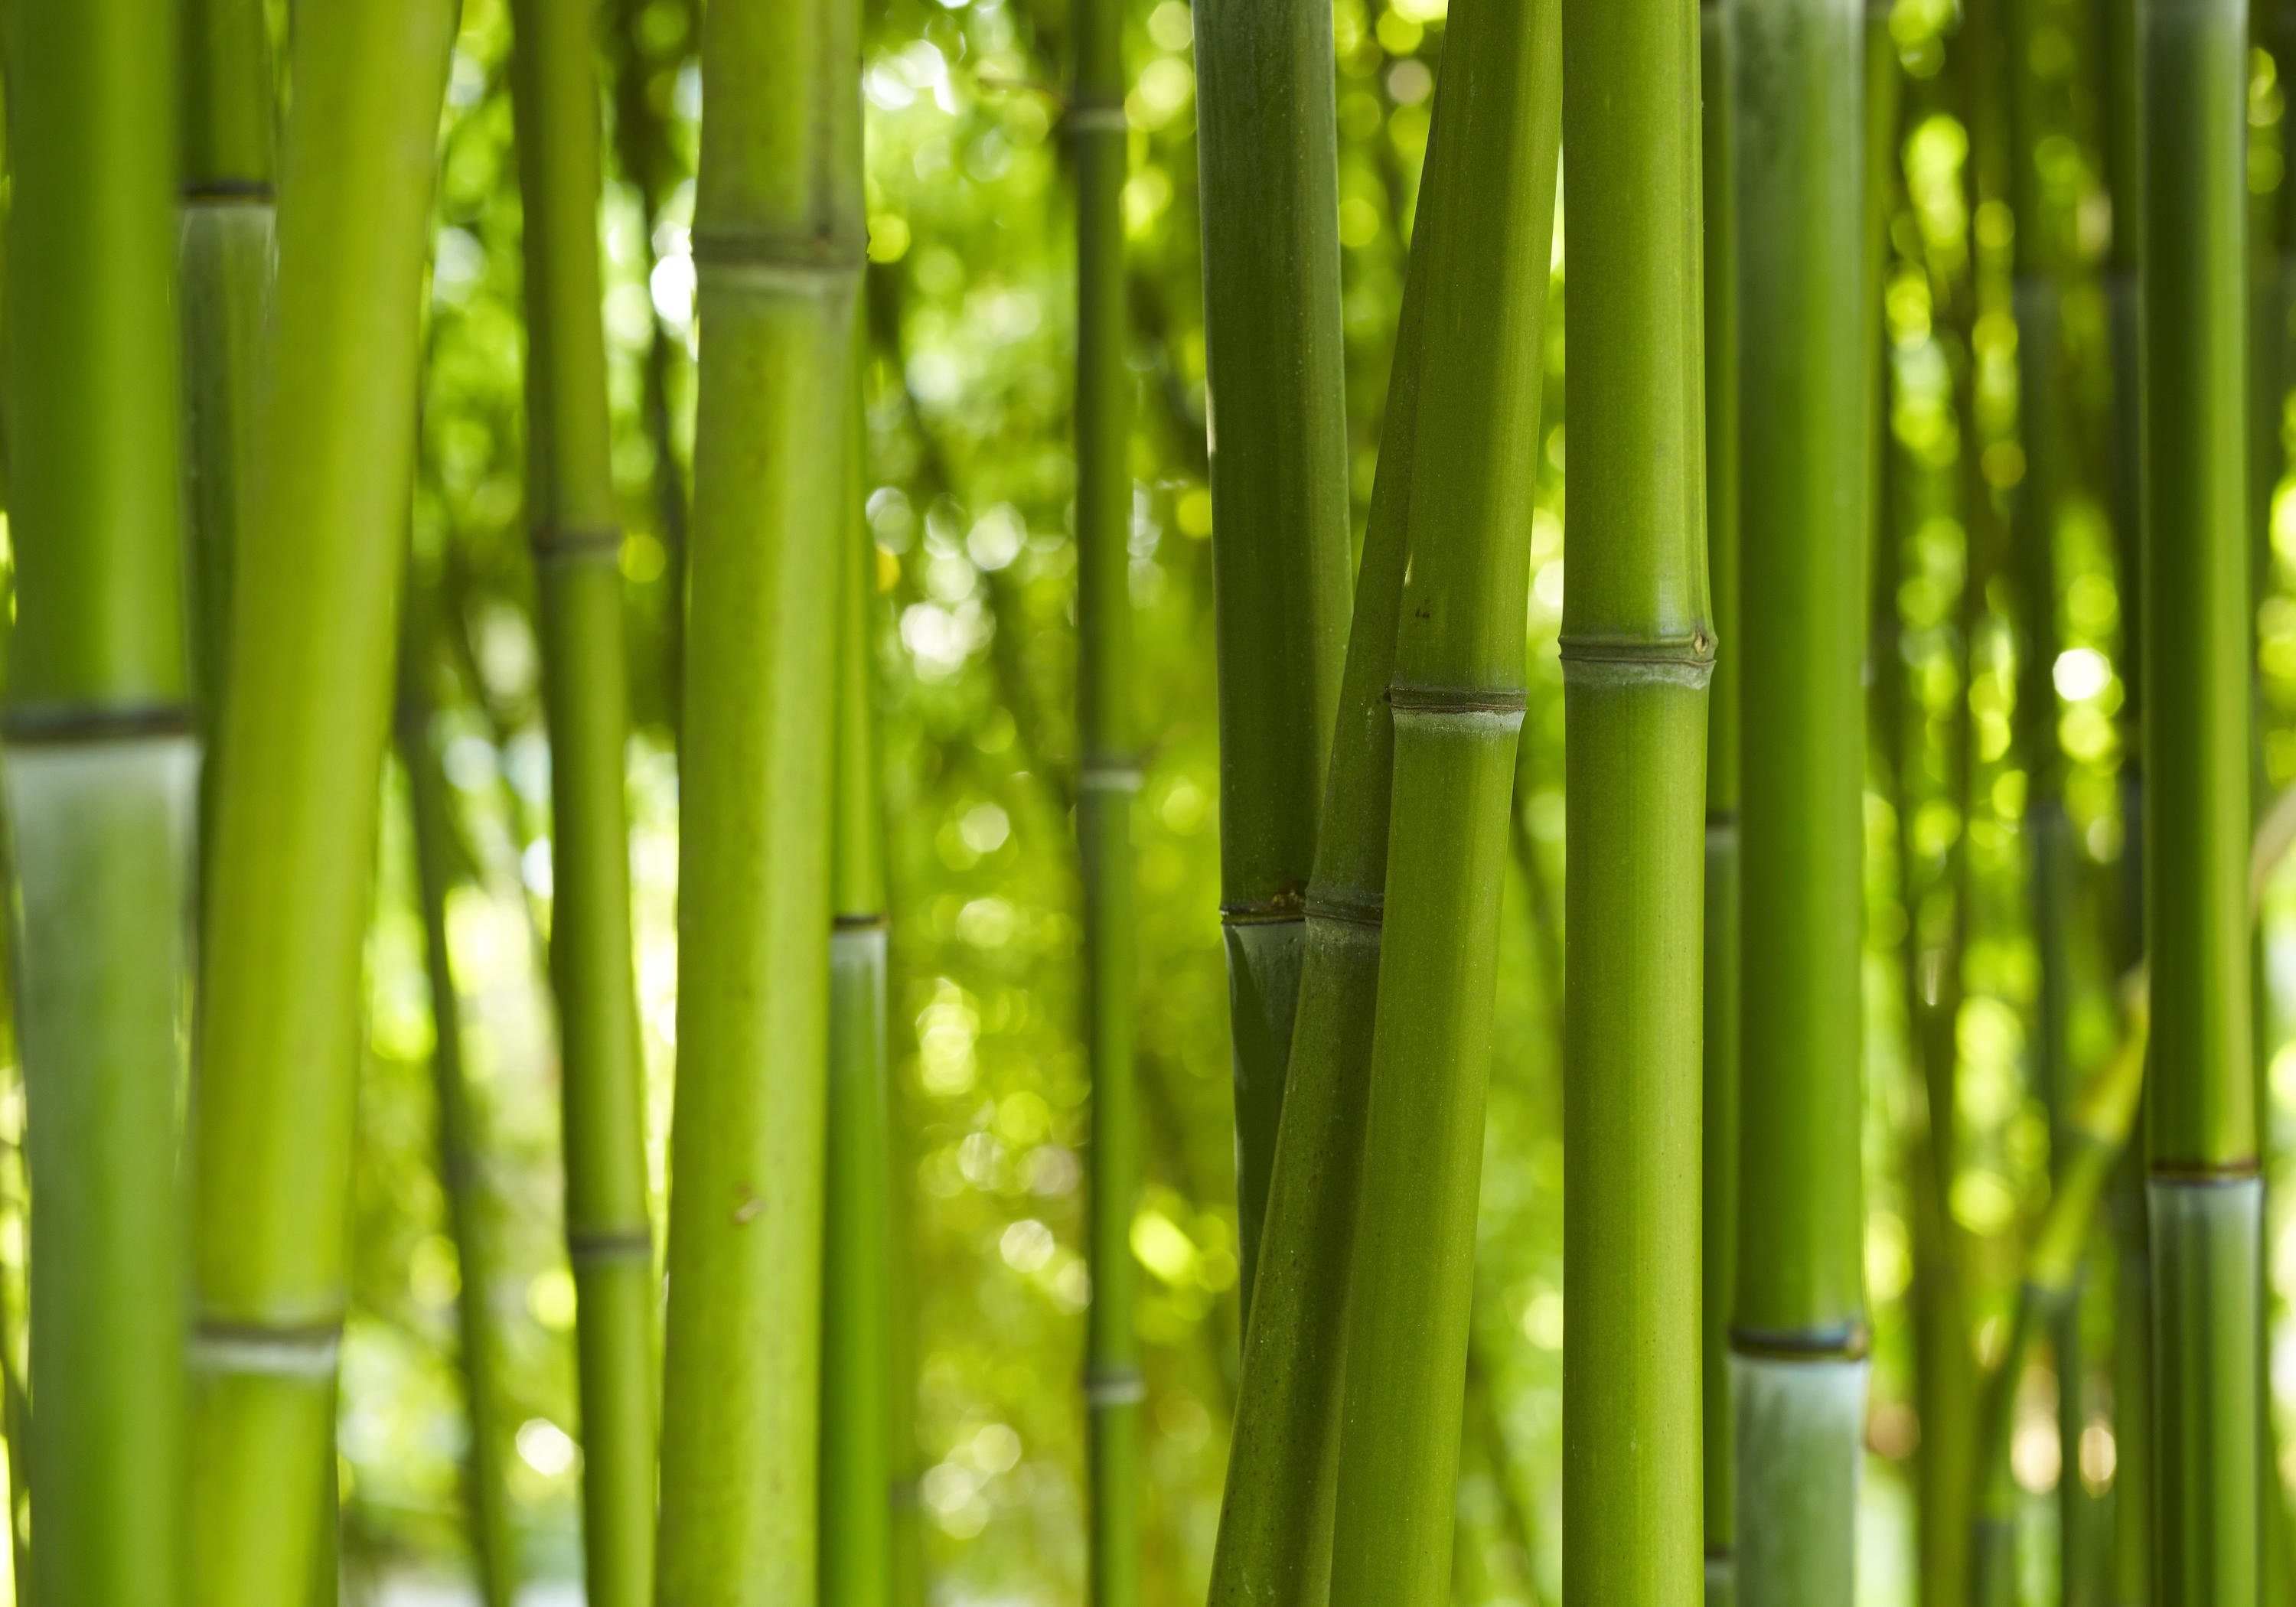 wandmotiv24 Fototapete Bambuswald, grüner Bambus, glatt, Wandtapete, Motivtapete, matt, Vliestapete